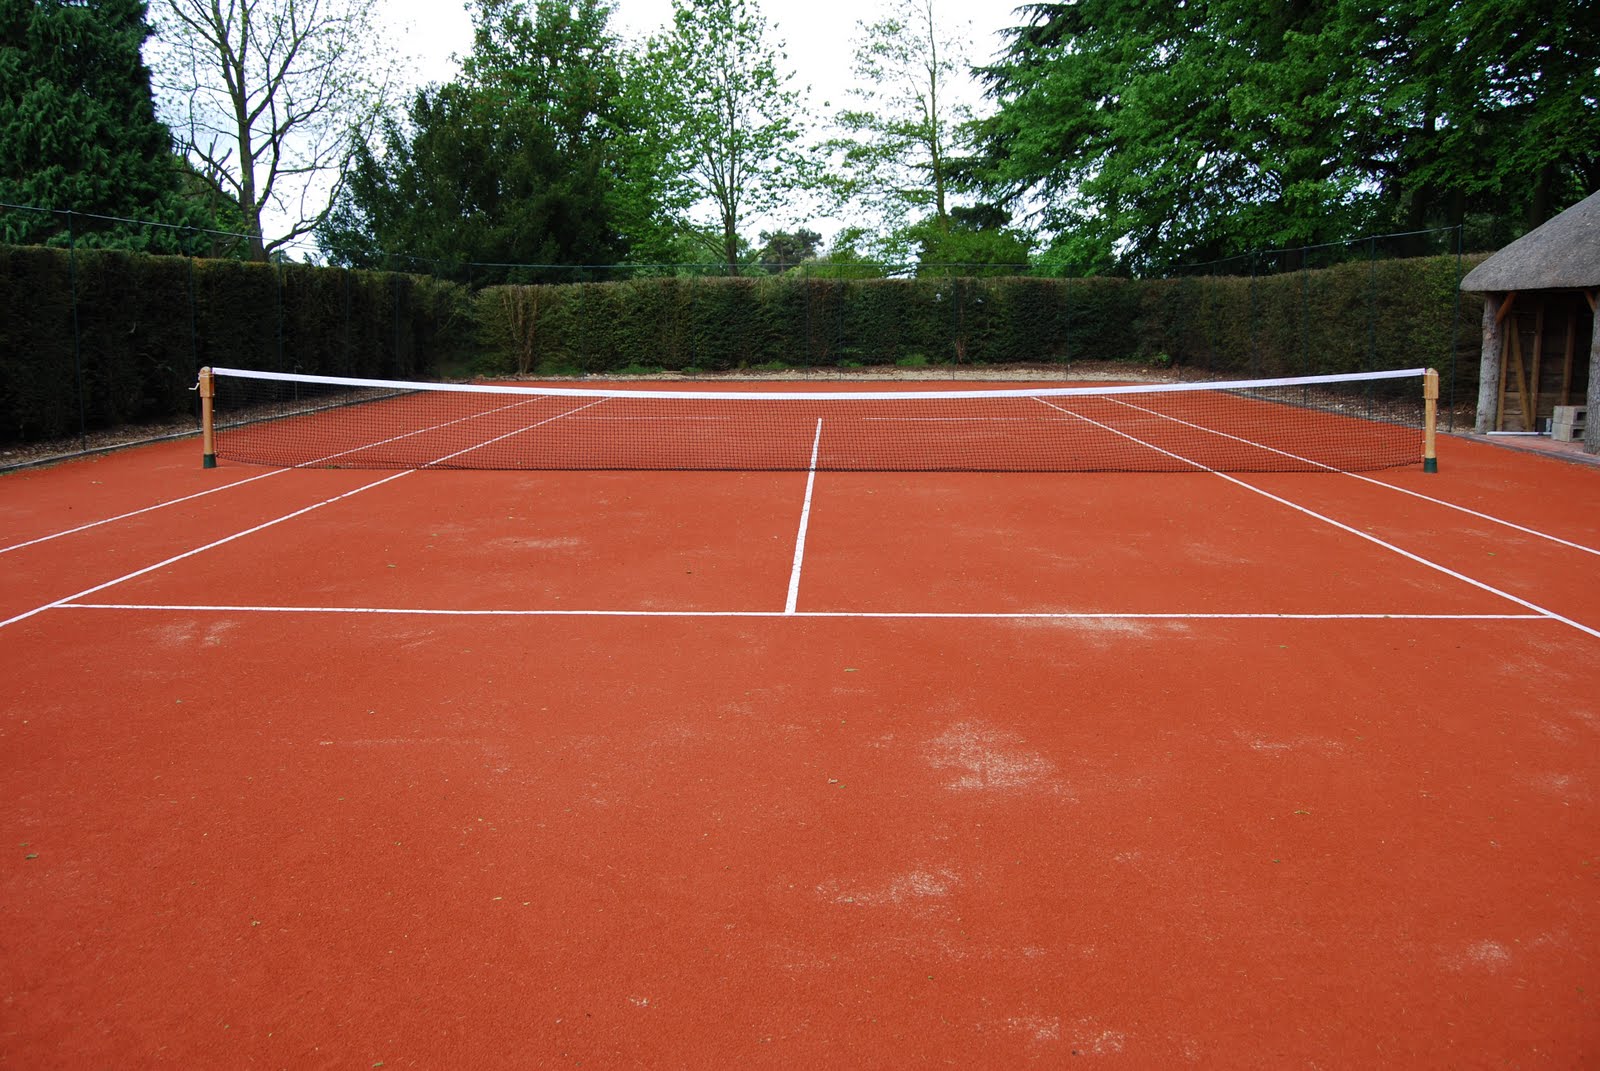 Clay Tennis Court Wallpaper. Tennis